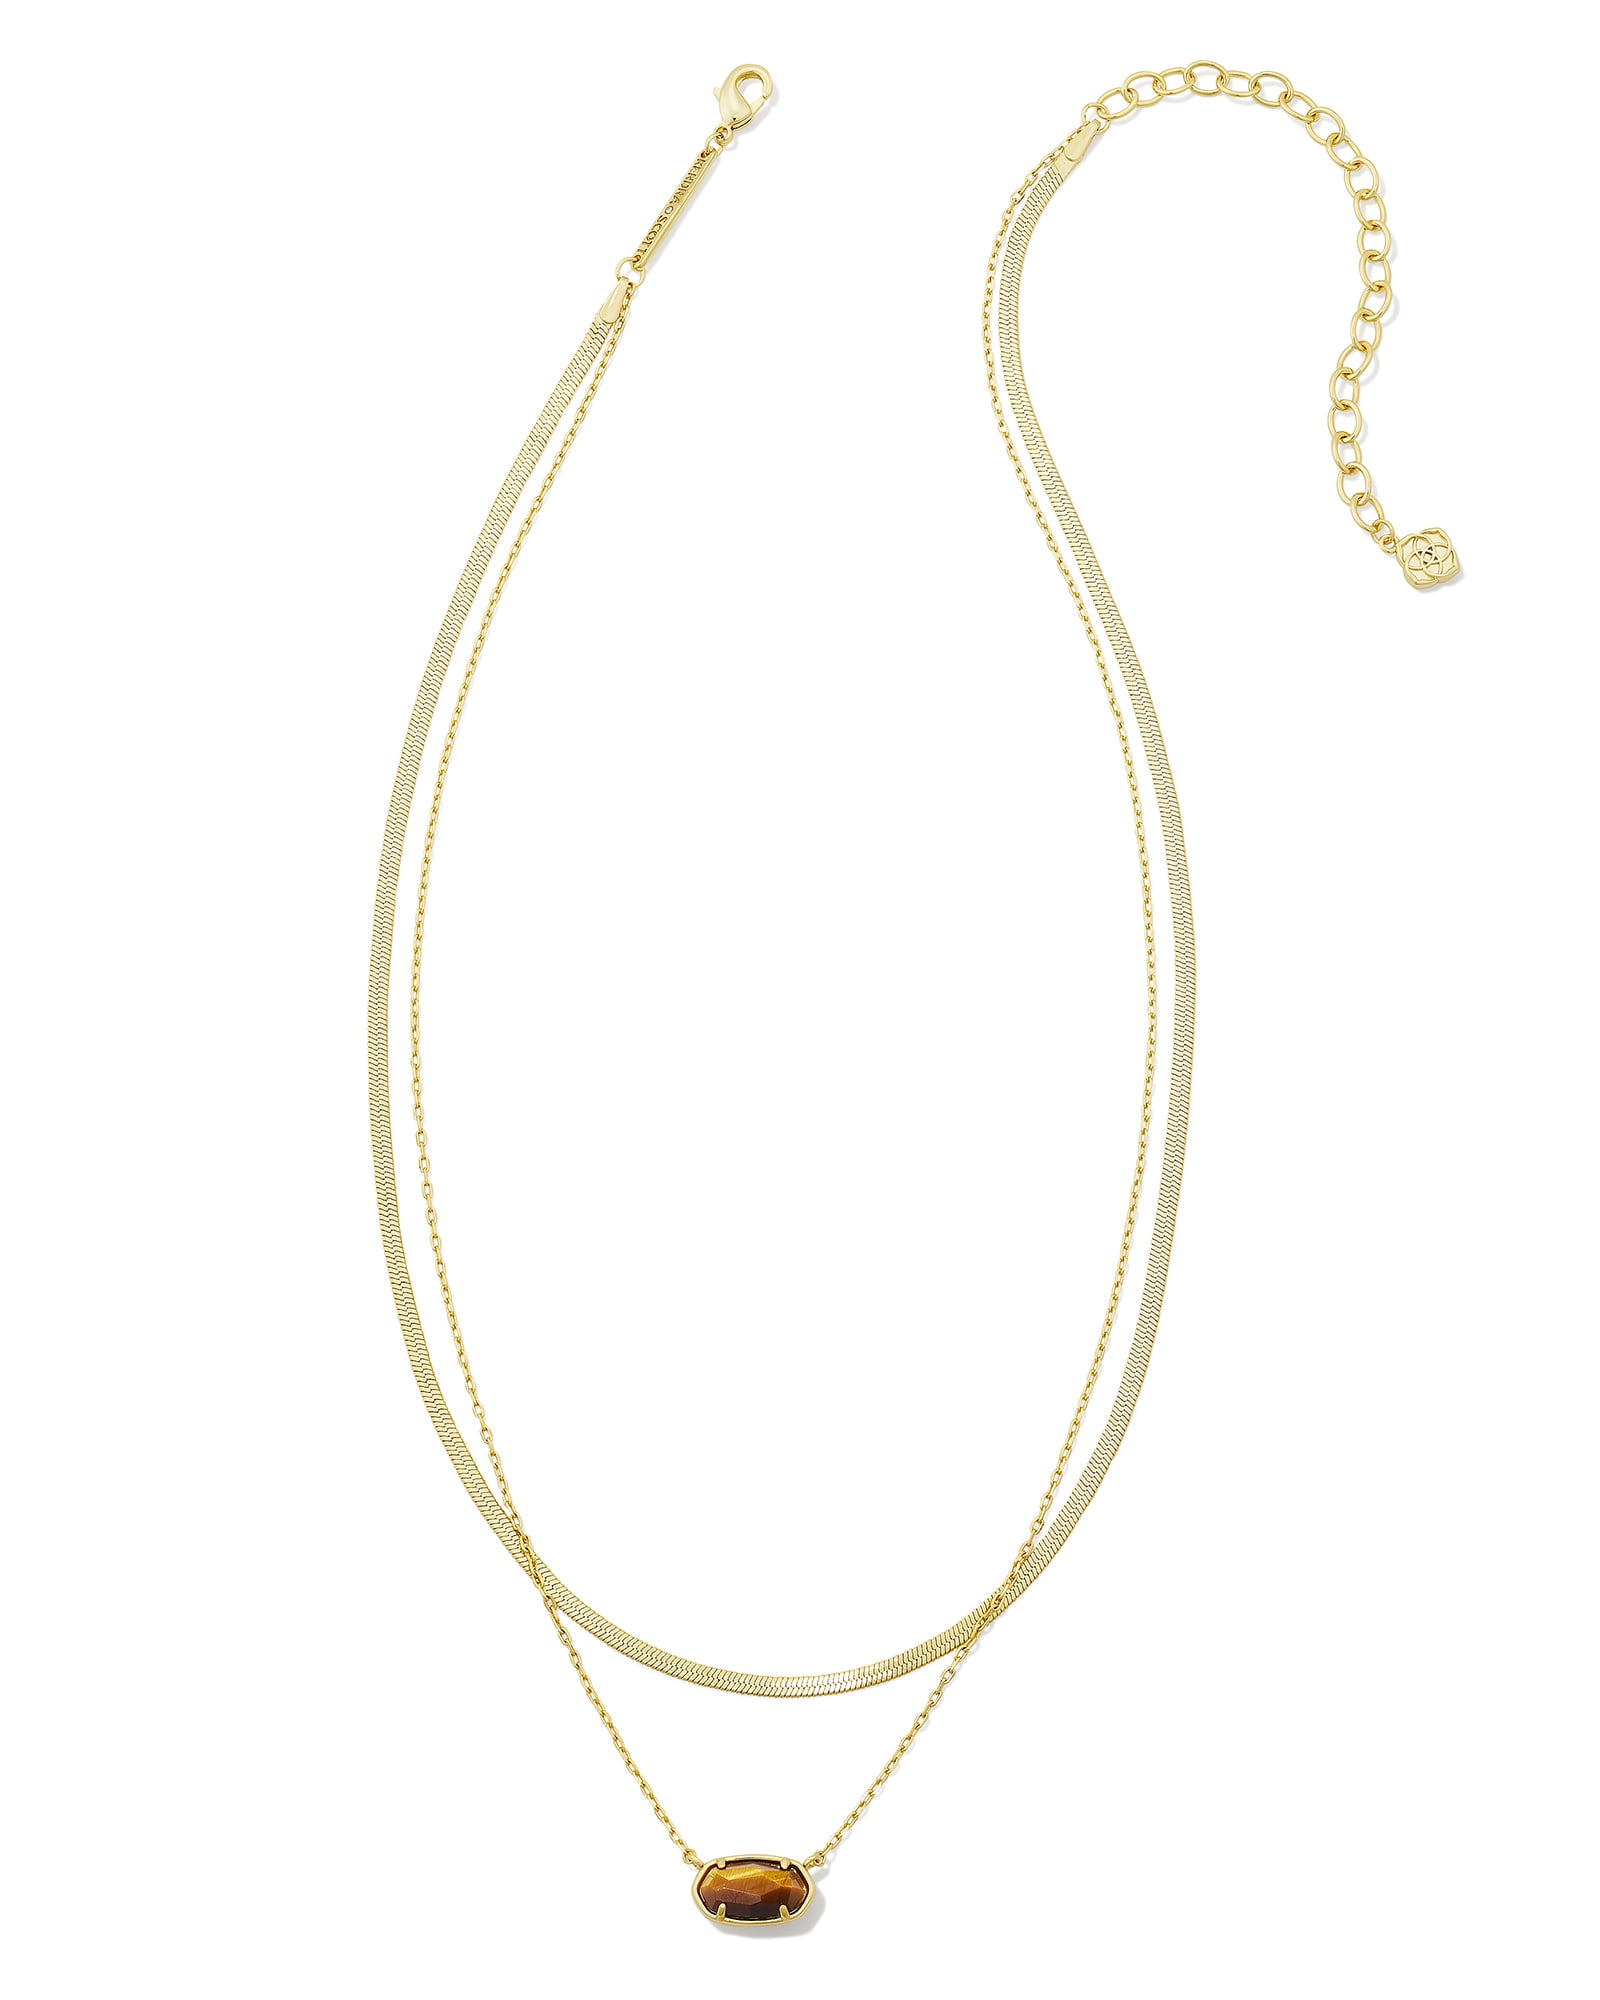 Grayson Herringbone Gold Multi Strand Necklace in Brown Tiger's